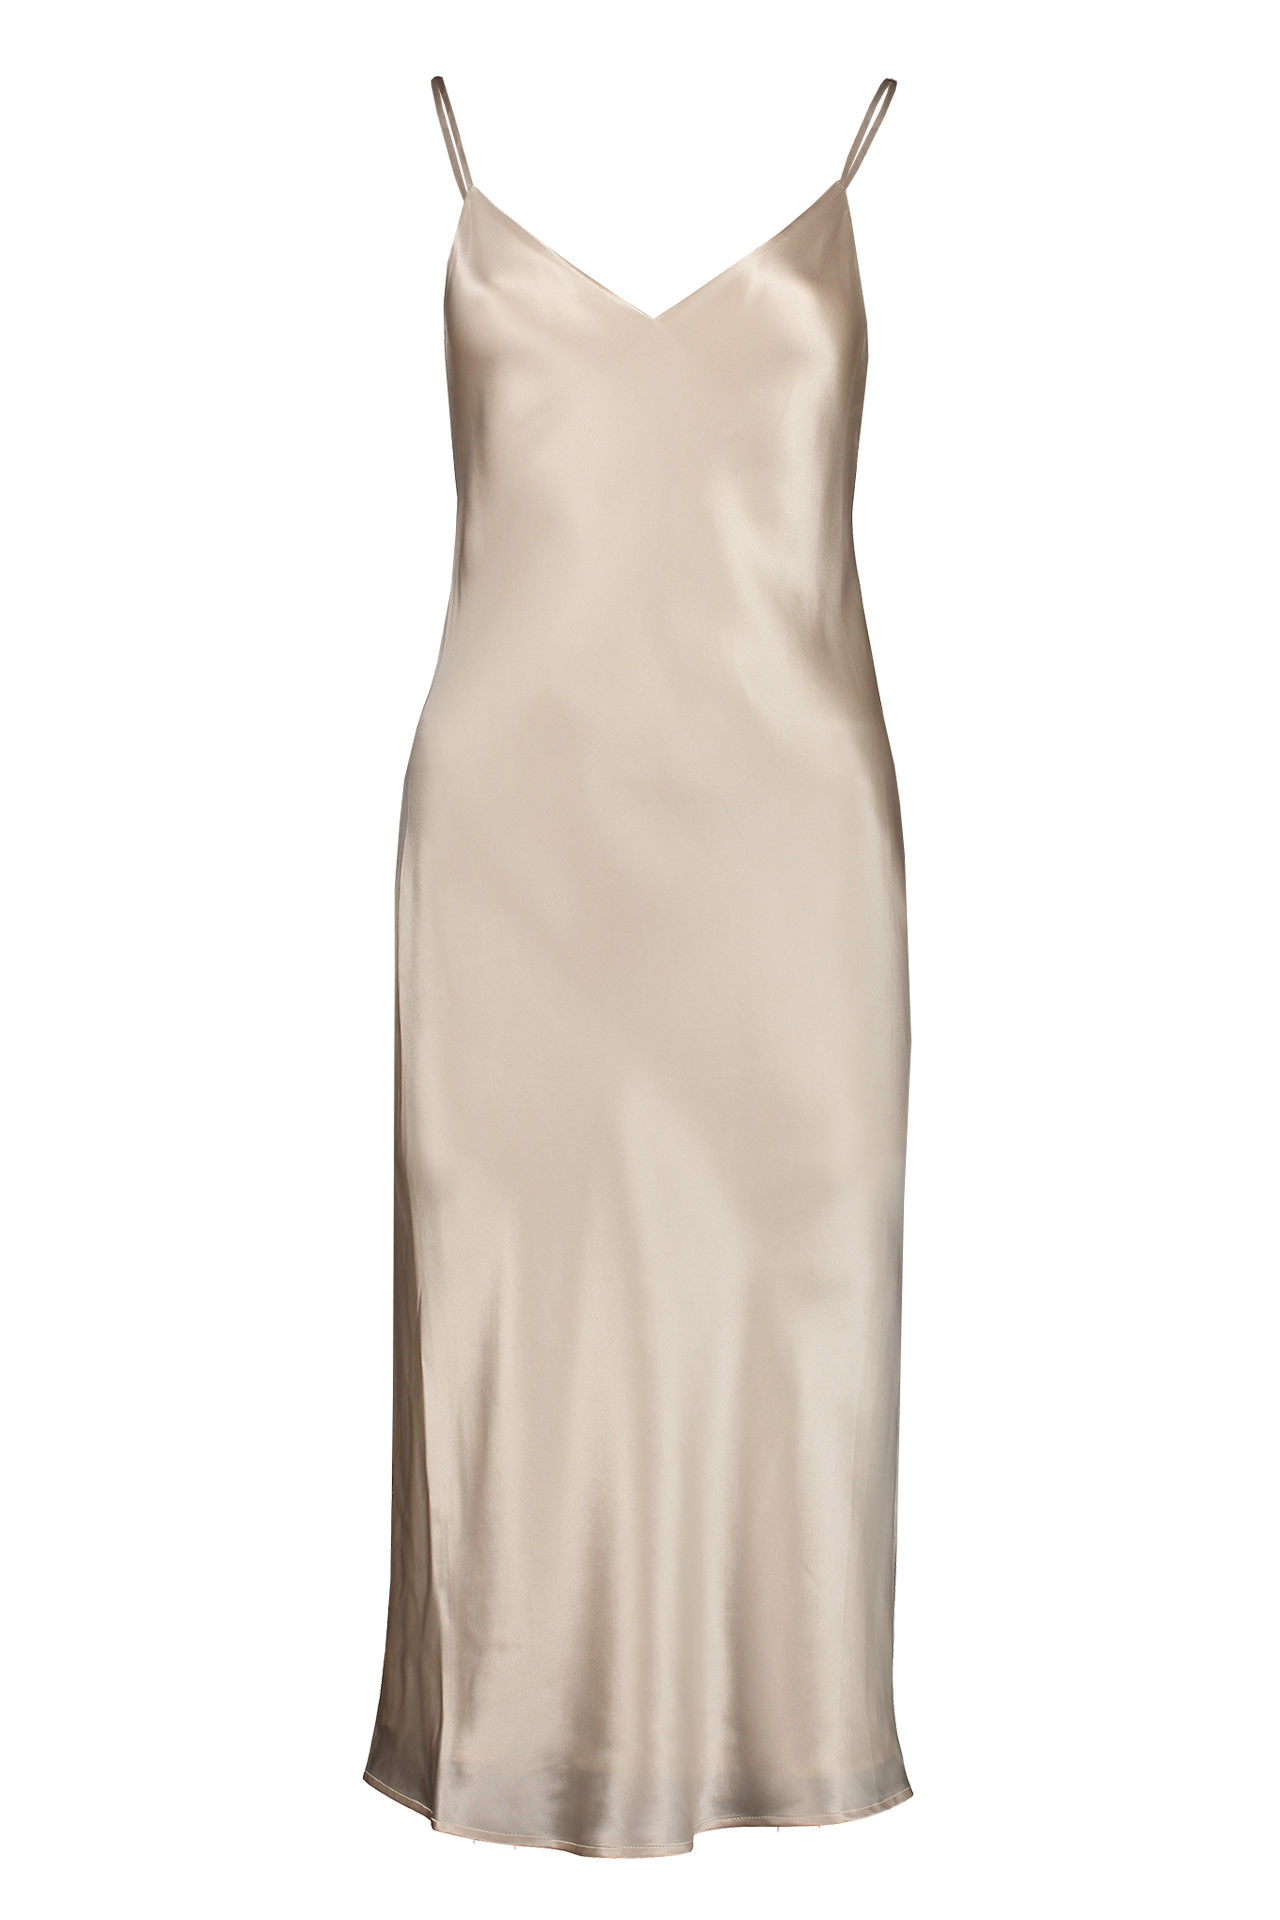 Lagence Jodie V-Neck Slip Dress Neutral Front Mannequin Image (6620465856627)